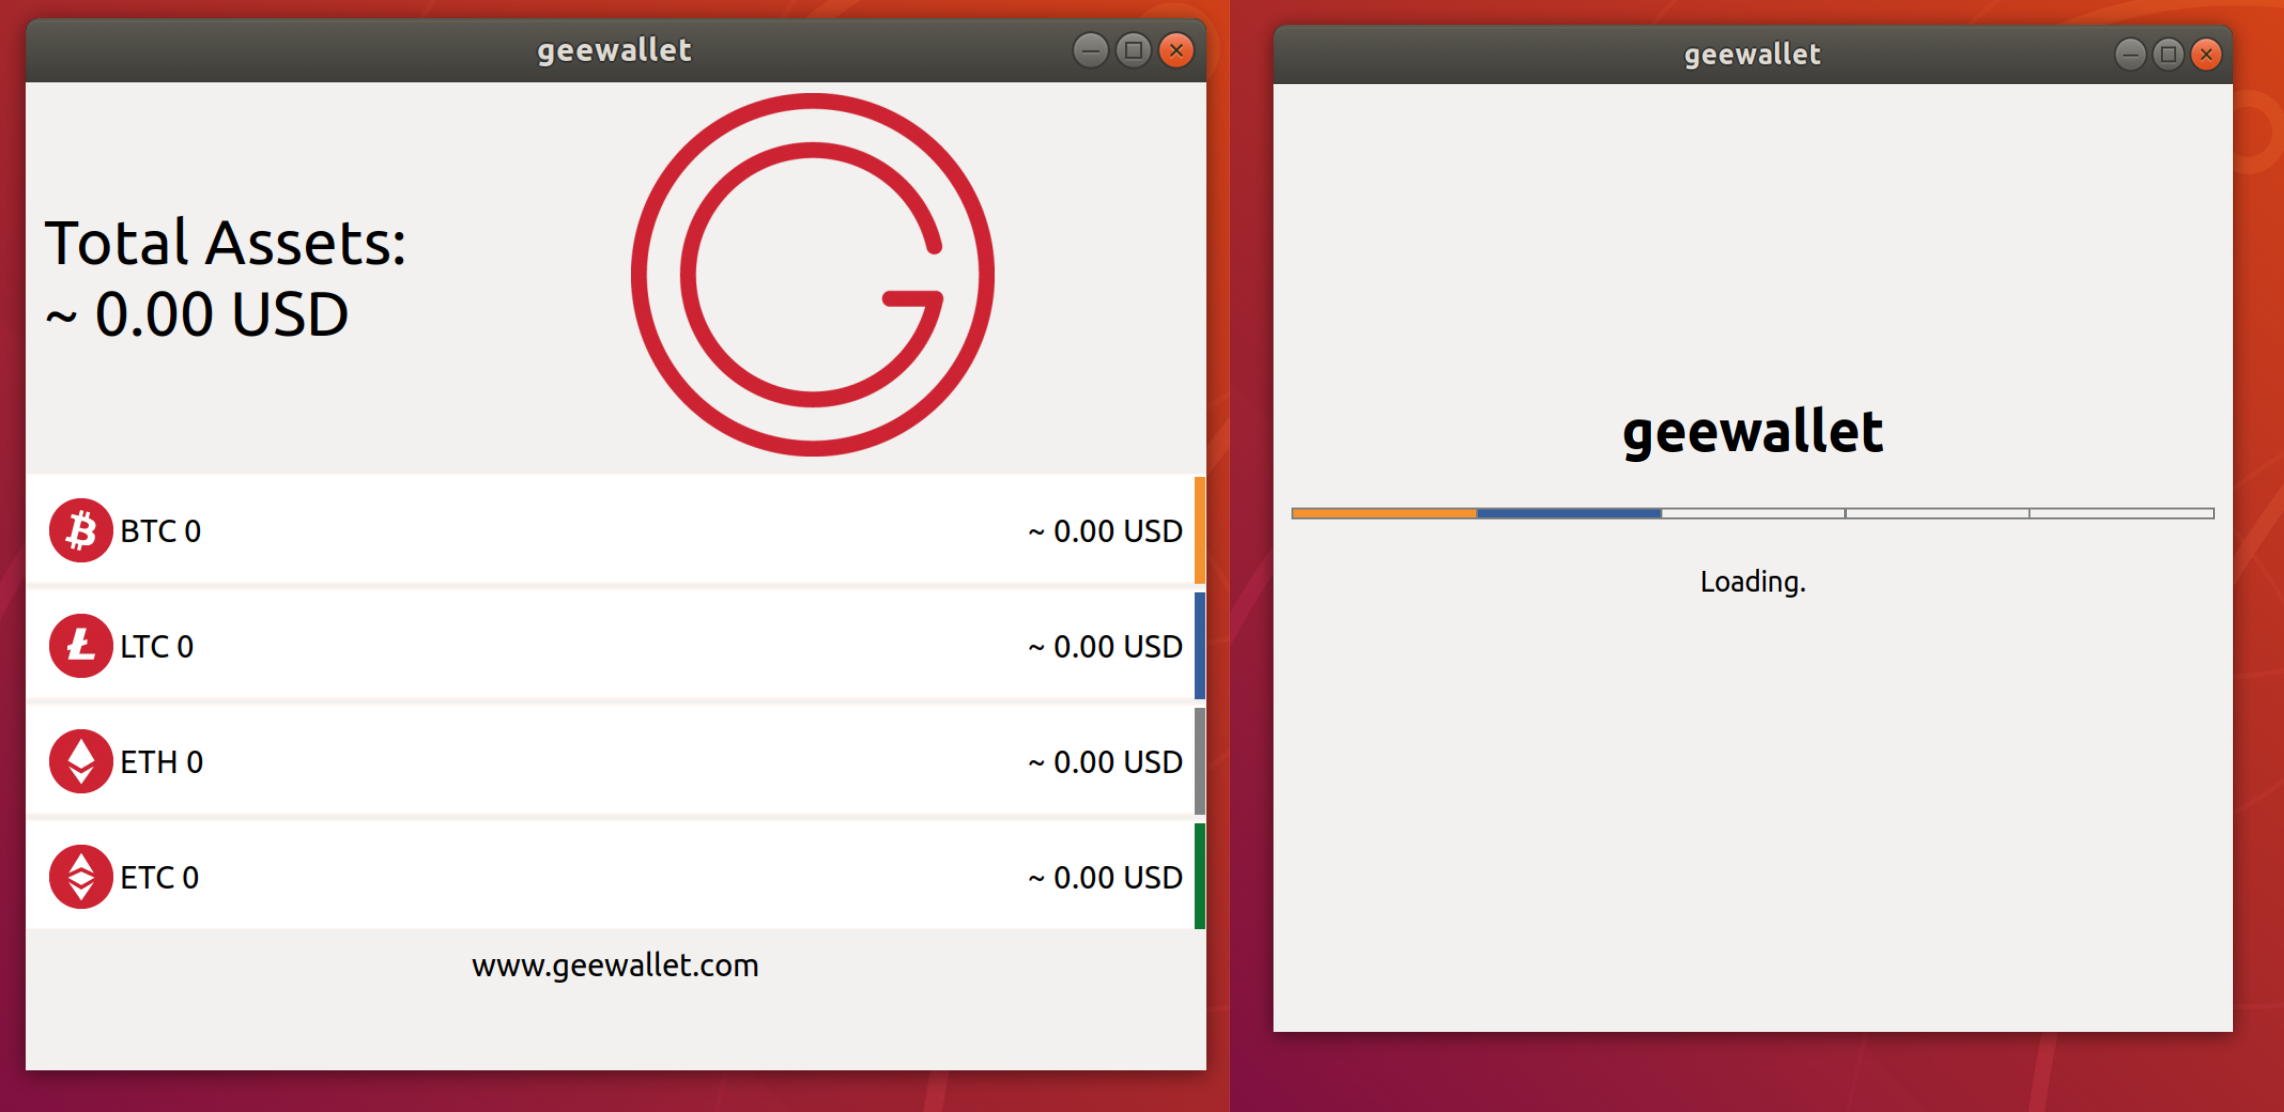 como-instalar-o-geewallet-uma-carteira-de-criptomoeda-no-ubuntu-linux-mint-fedora-debian